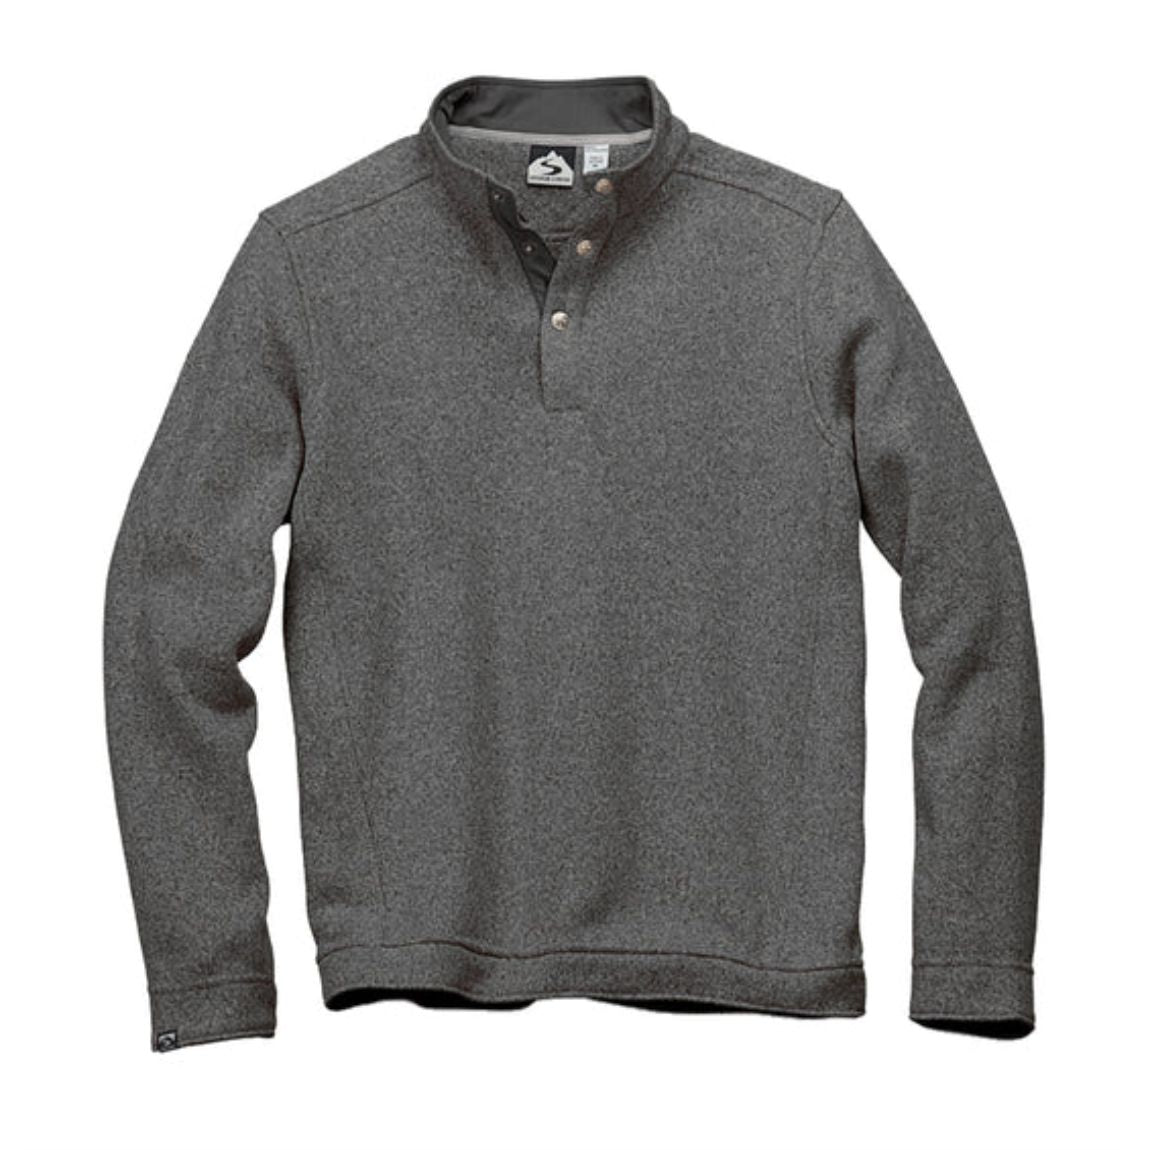 Unisex Overachiever Sweaterfleece Pullover